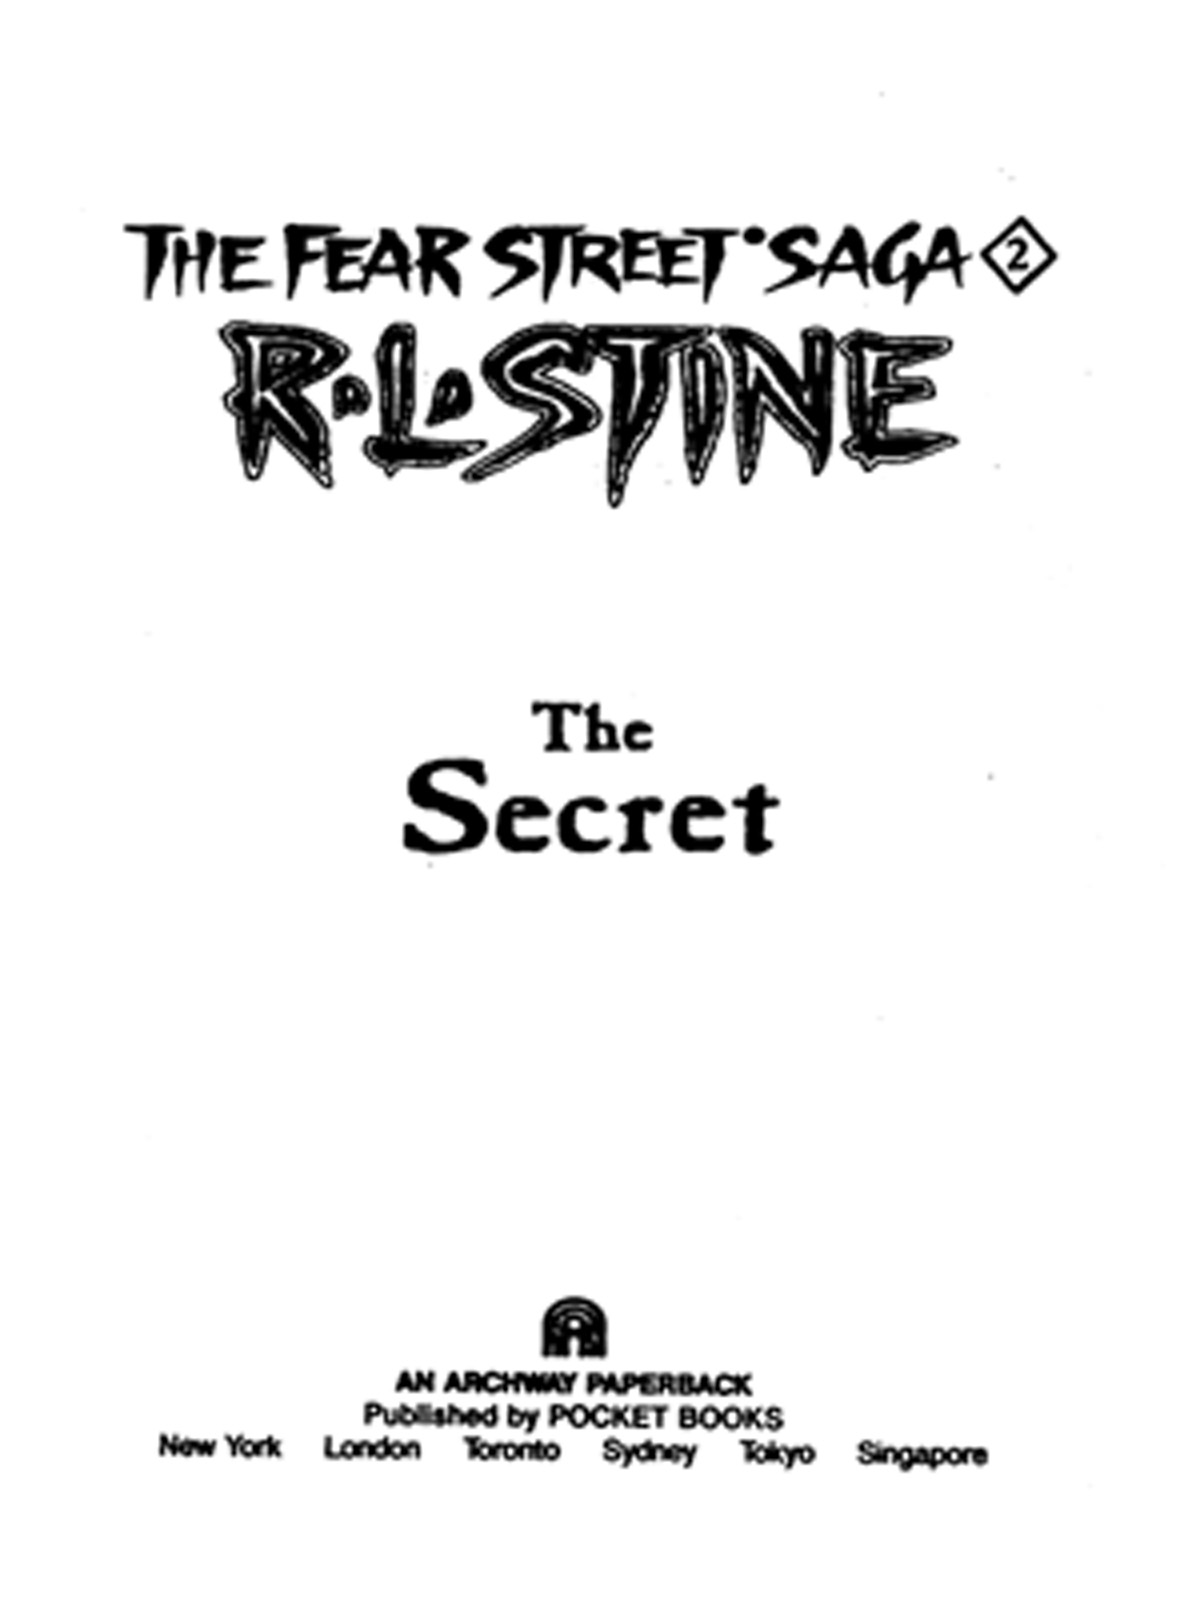 The Secret (1993) by R.L. Stine